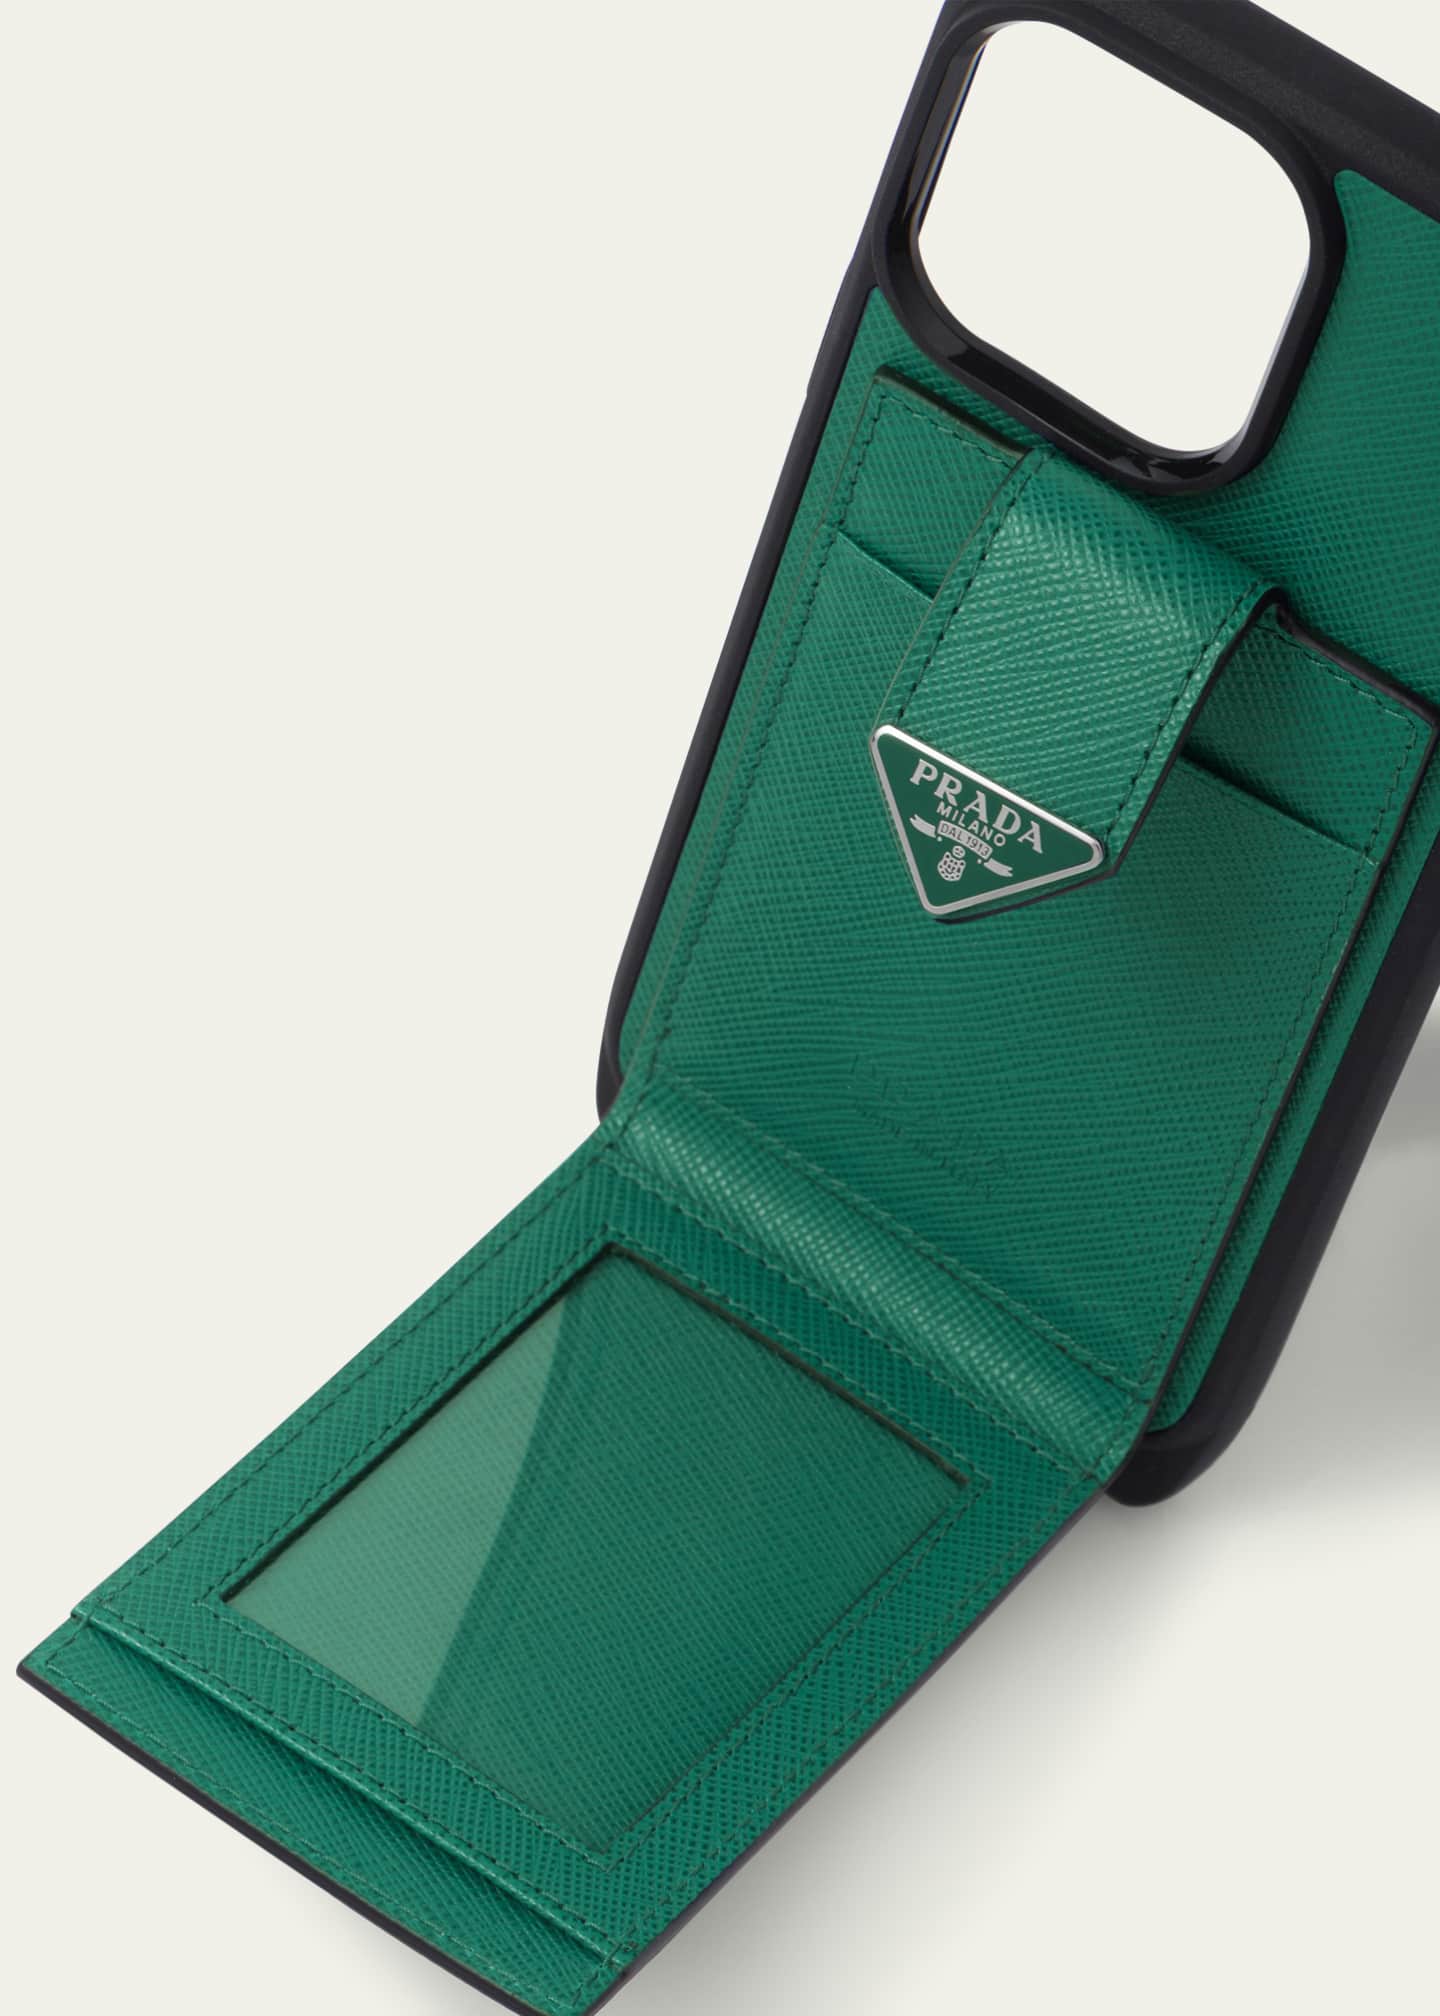 Prada Green Saffiano Leather Smartphone Case Prada